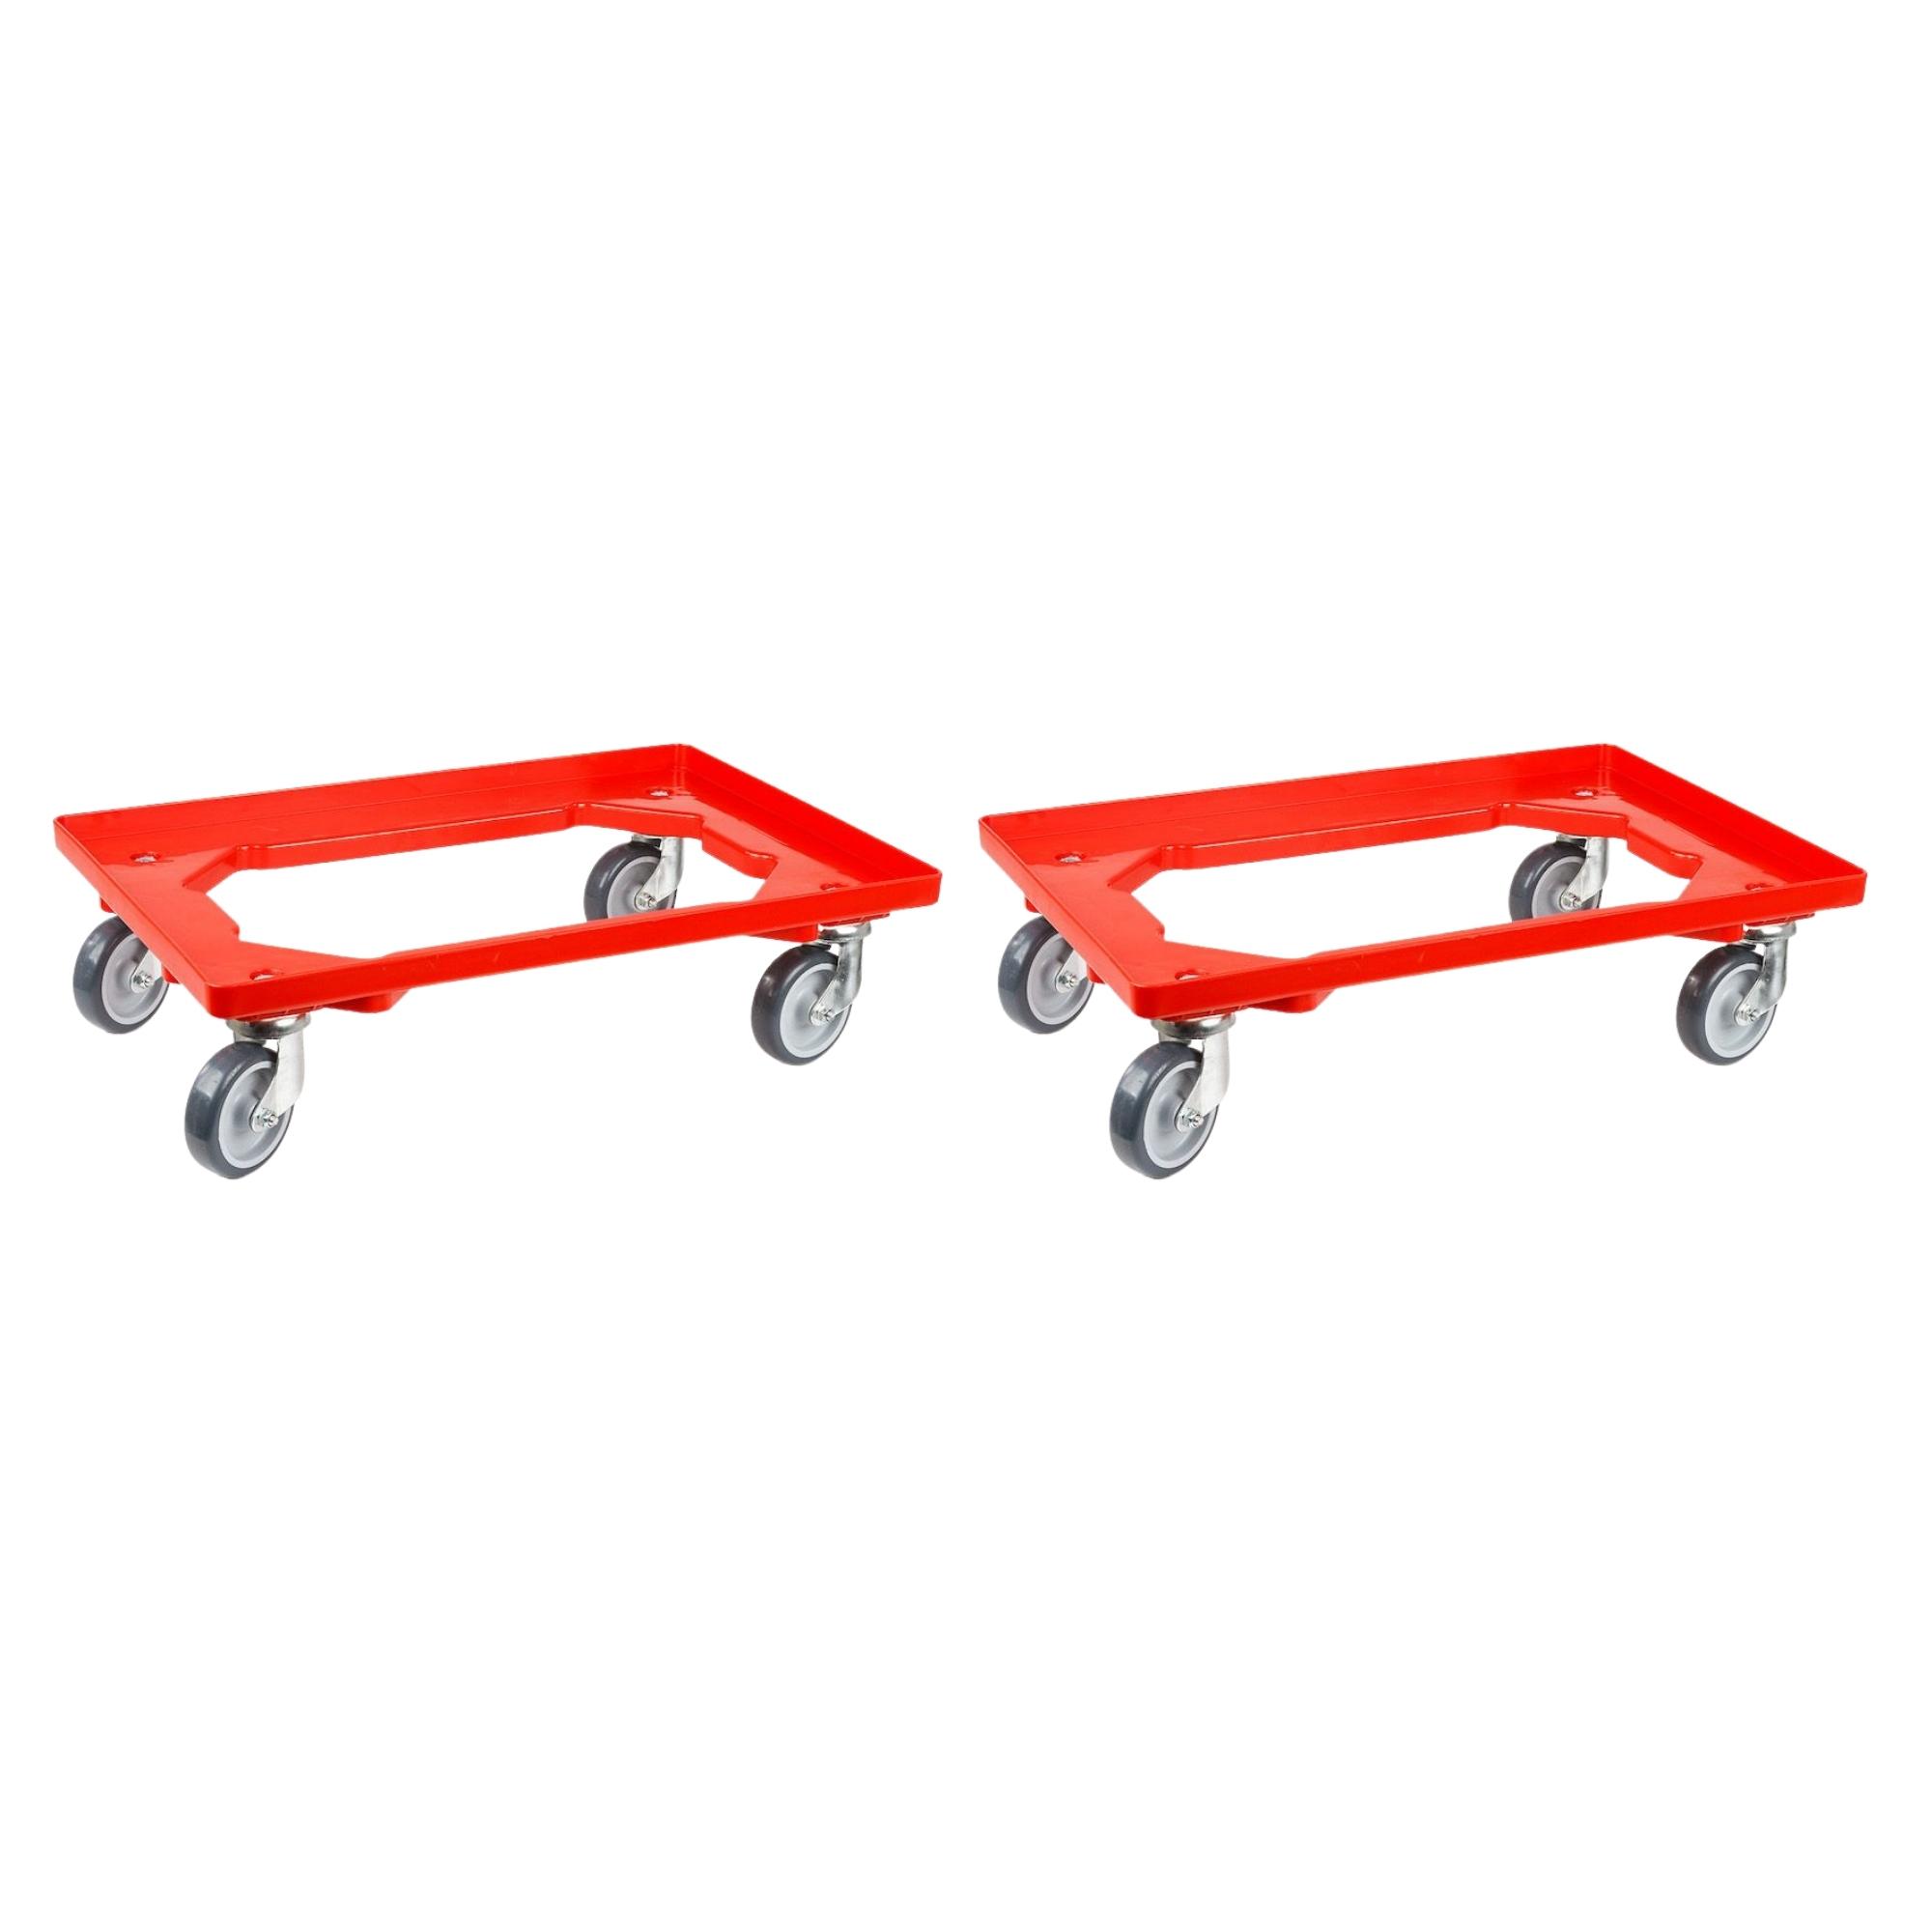 SparSet 2x Transportroller für Euroboxen 60x40cm mit Gummiräder rot | Offenes Deck | 2 Lenkrollen & 2 Bockrollen | Traglast 300kg | Kistenroller Logistikroller Rollwagen Profi-Fahrgestell